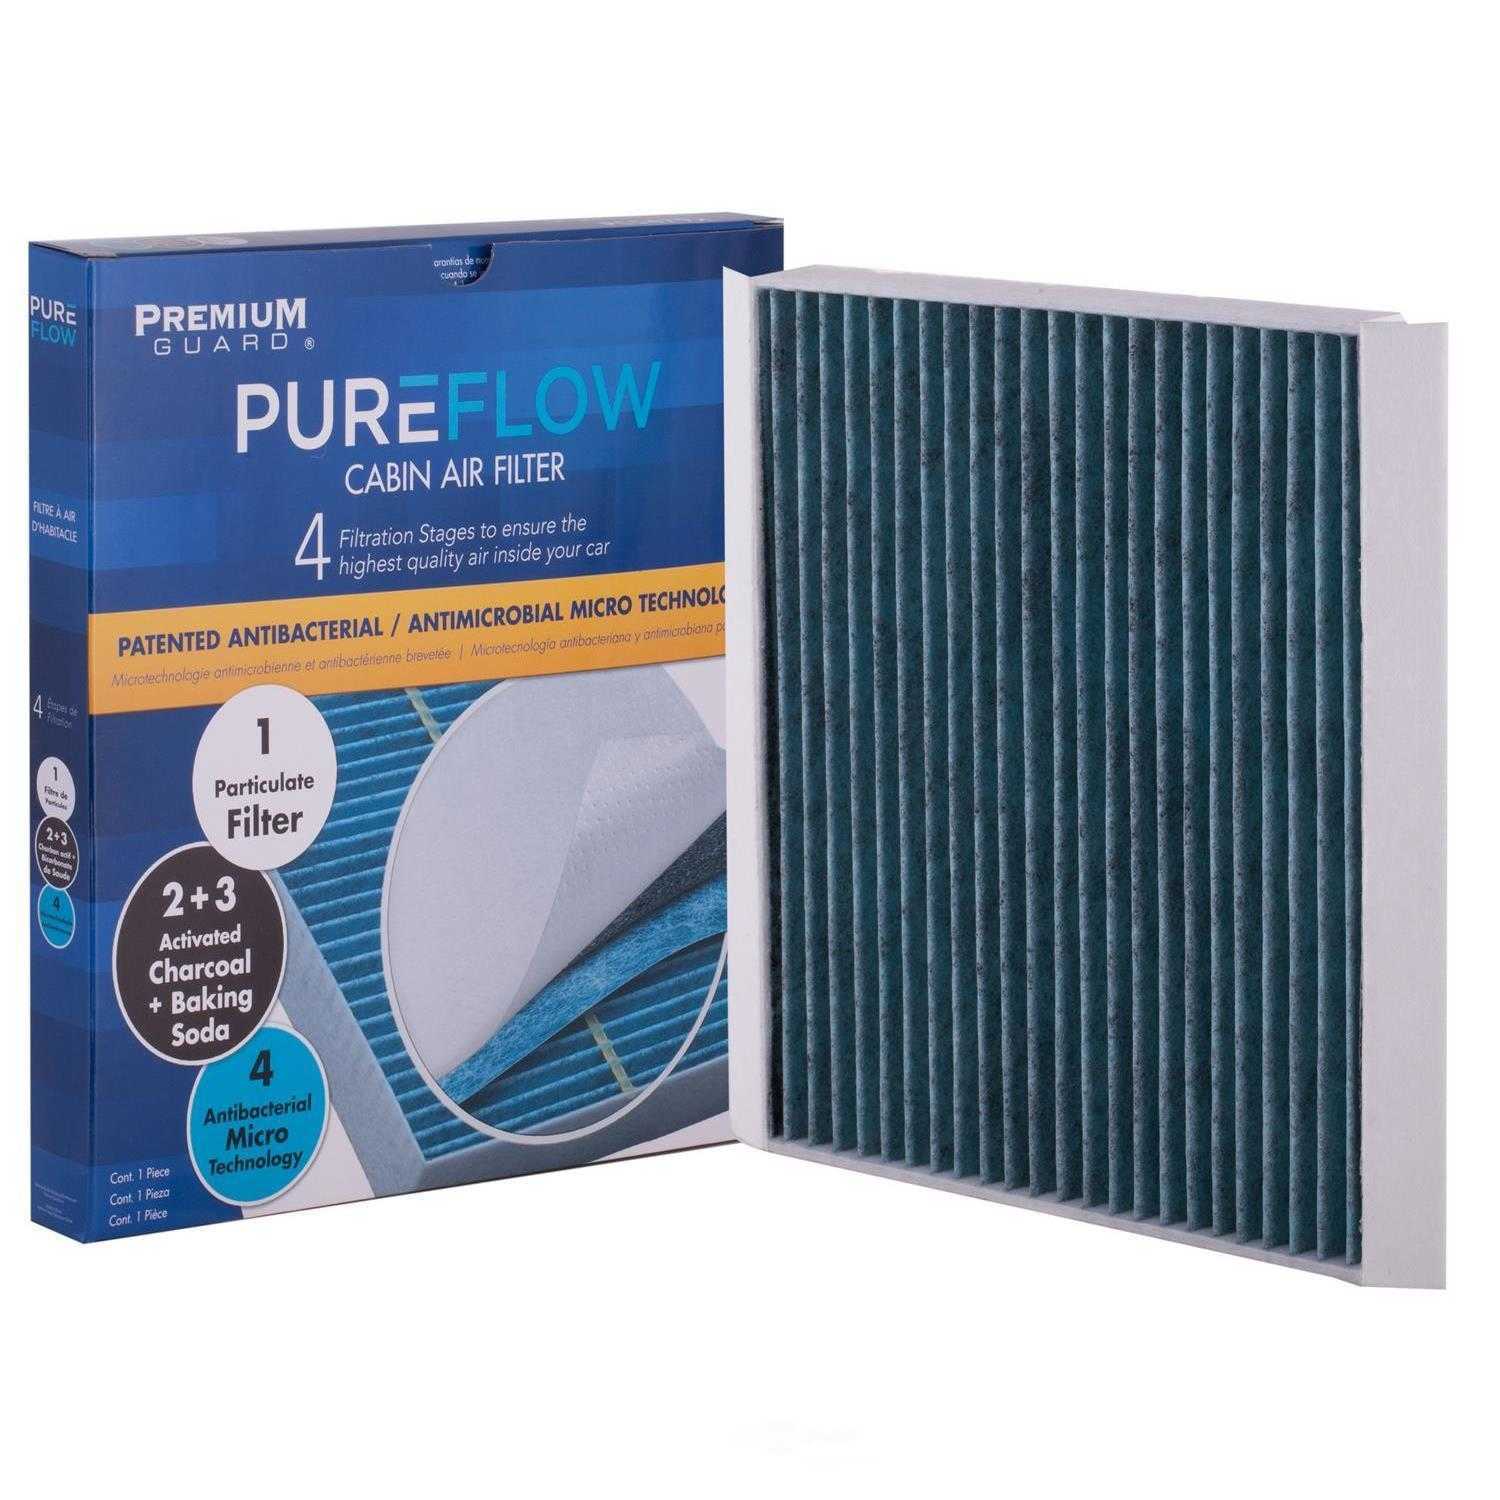 PREMIUM GUARD PUREFLOW - PureFlow - PG6 PC5660X